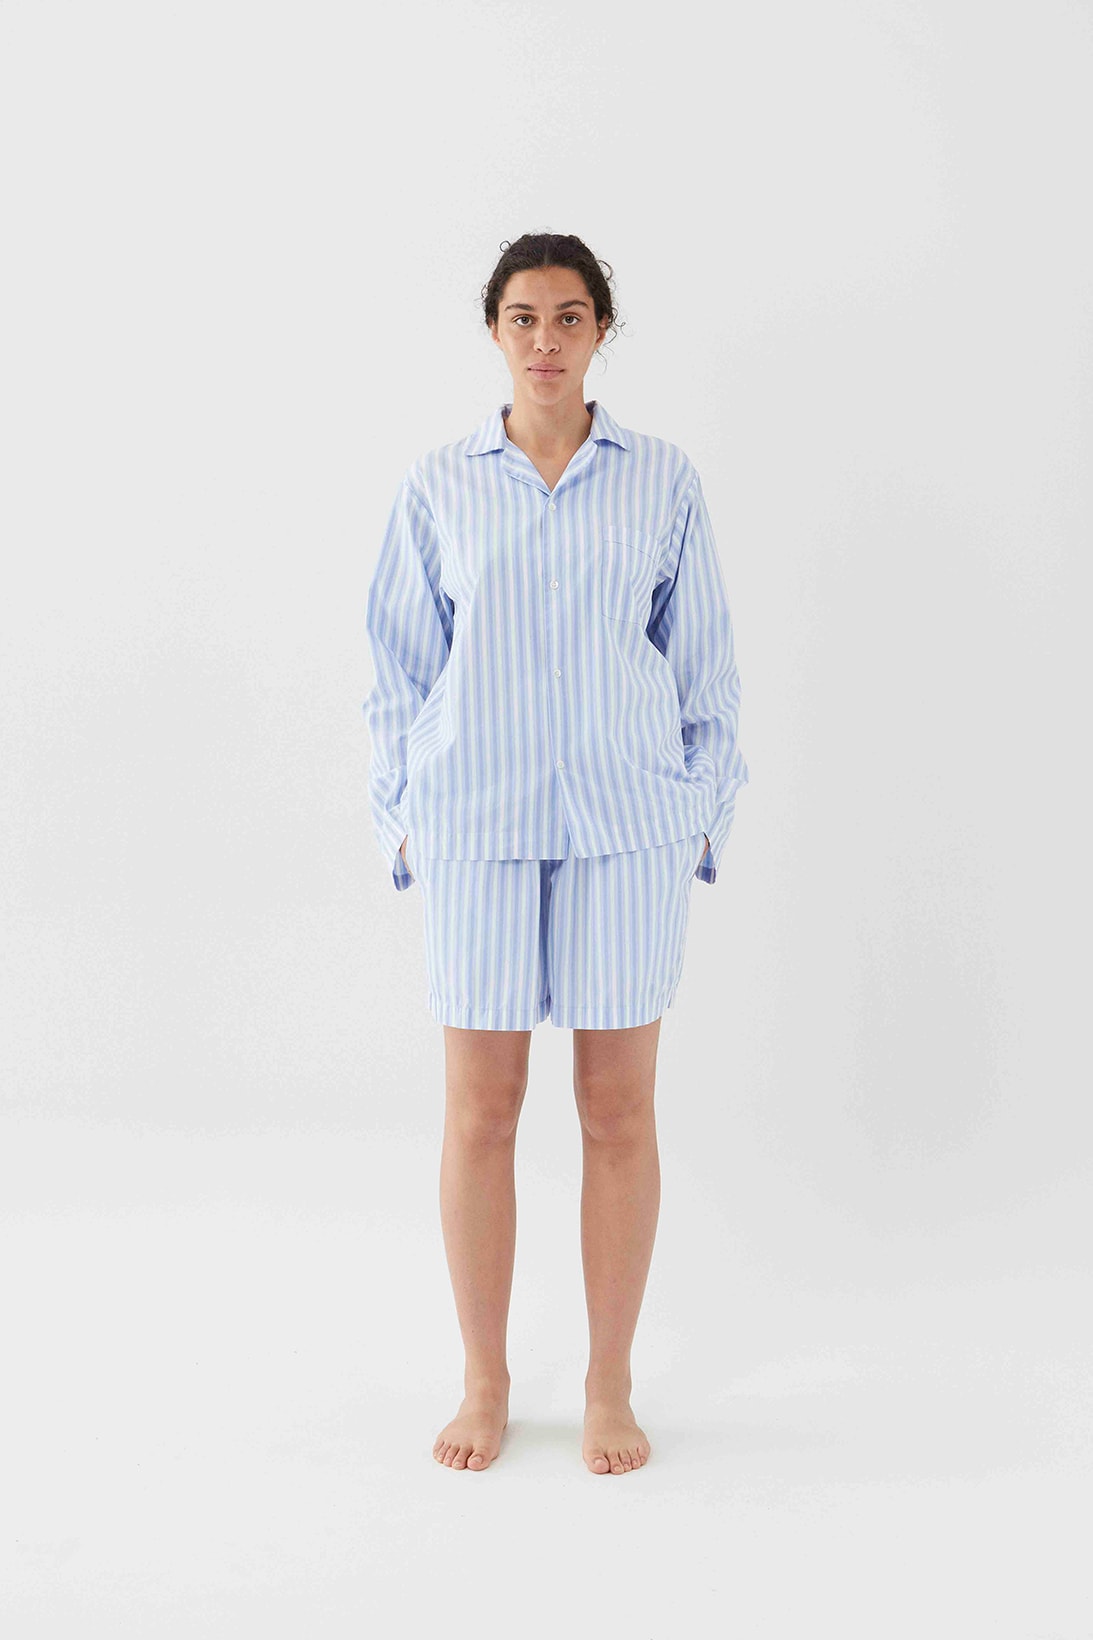 tekla unisex sleepwear loungewear collection sustainable shirts trousers shorts pink blue 